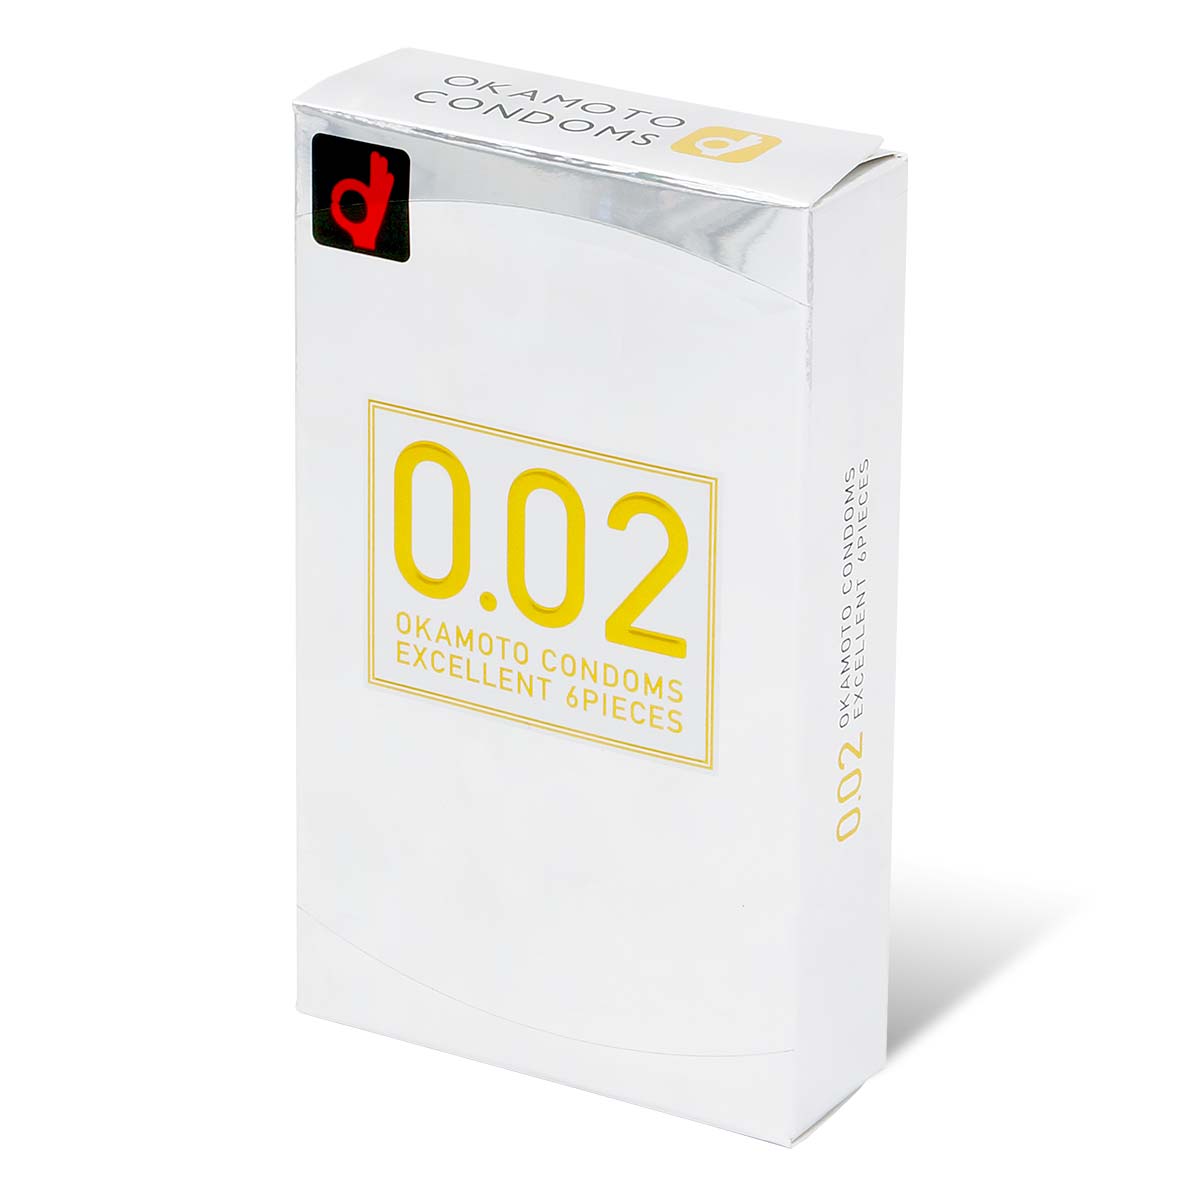 Okamoto Unified Thinness 0.02EX (Japan Edition) 6's Pack PU Condom-p_1